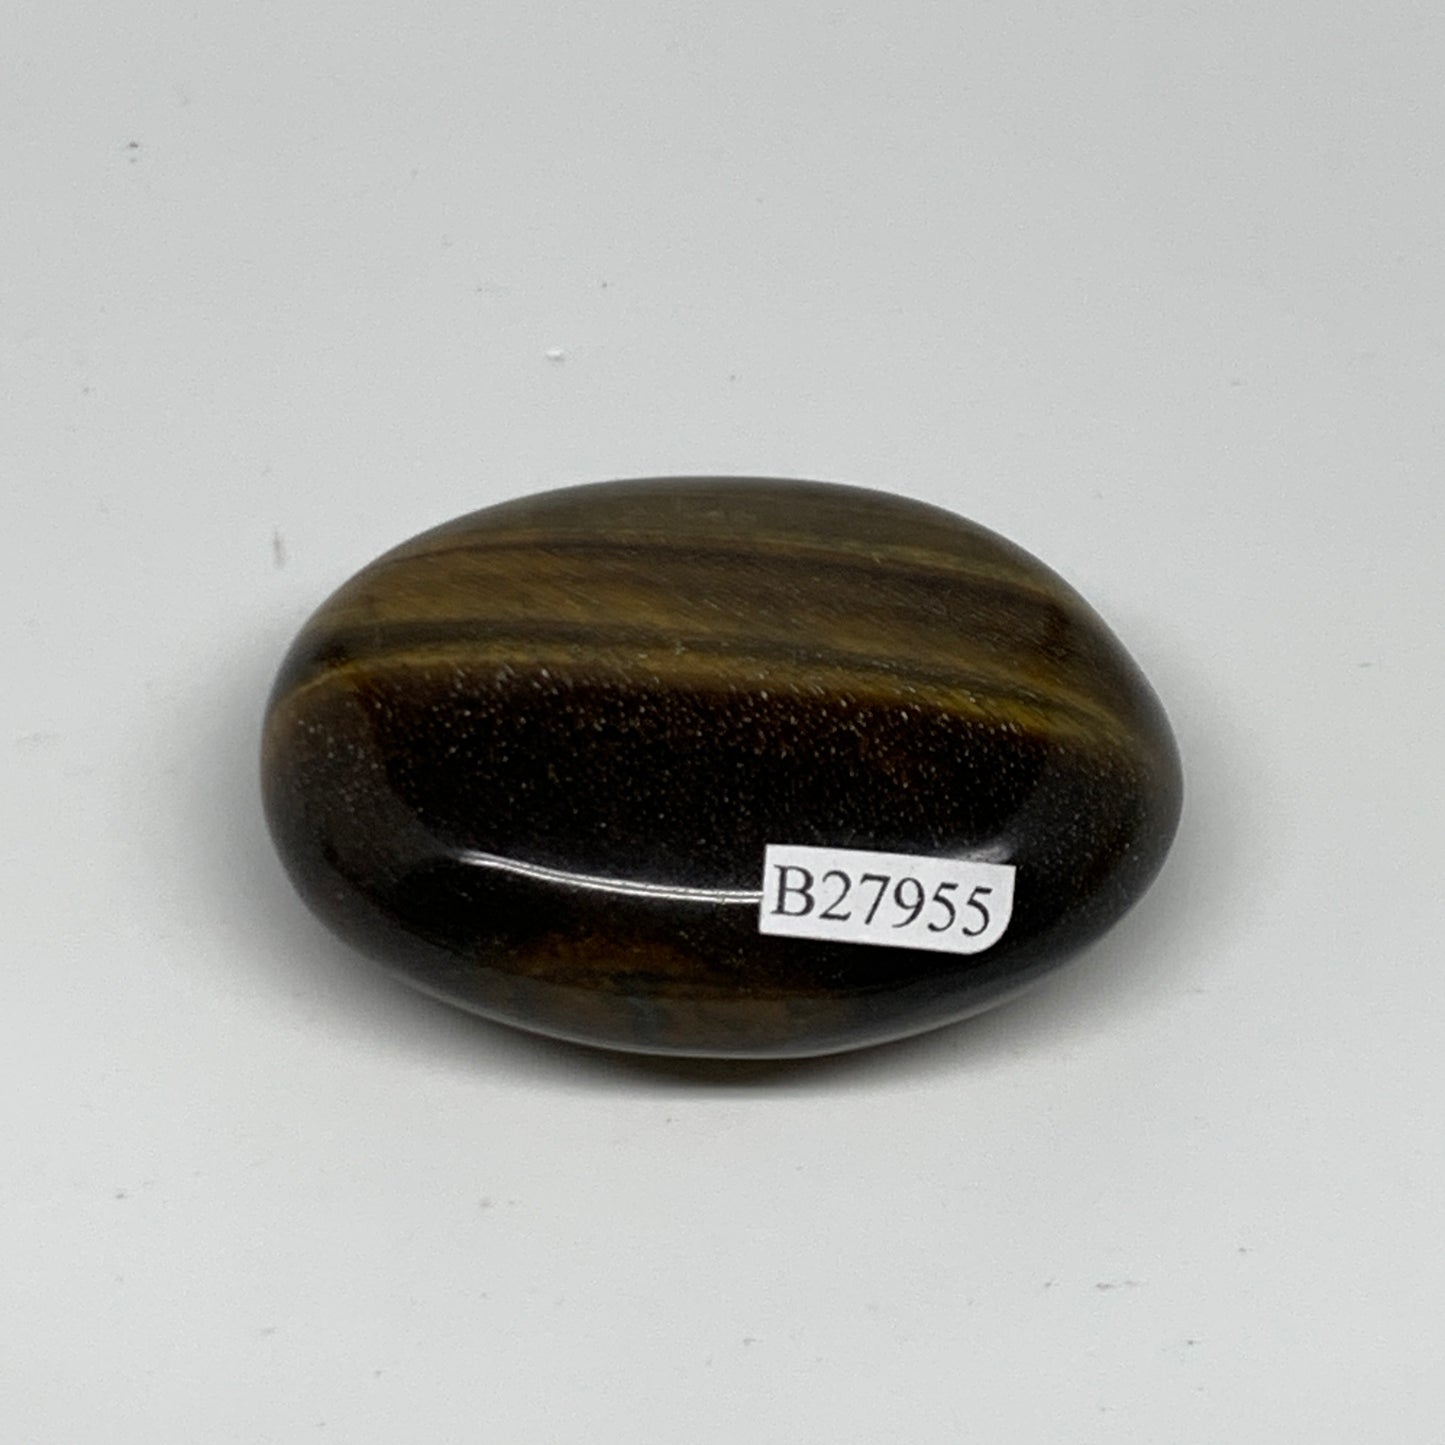 76.5g, 2.2"x1.6"x0.8", Natural Tiger's Eye Palm-Stone Gemstone @India, B27955